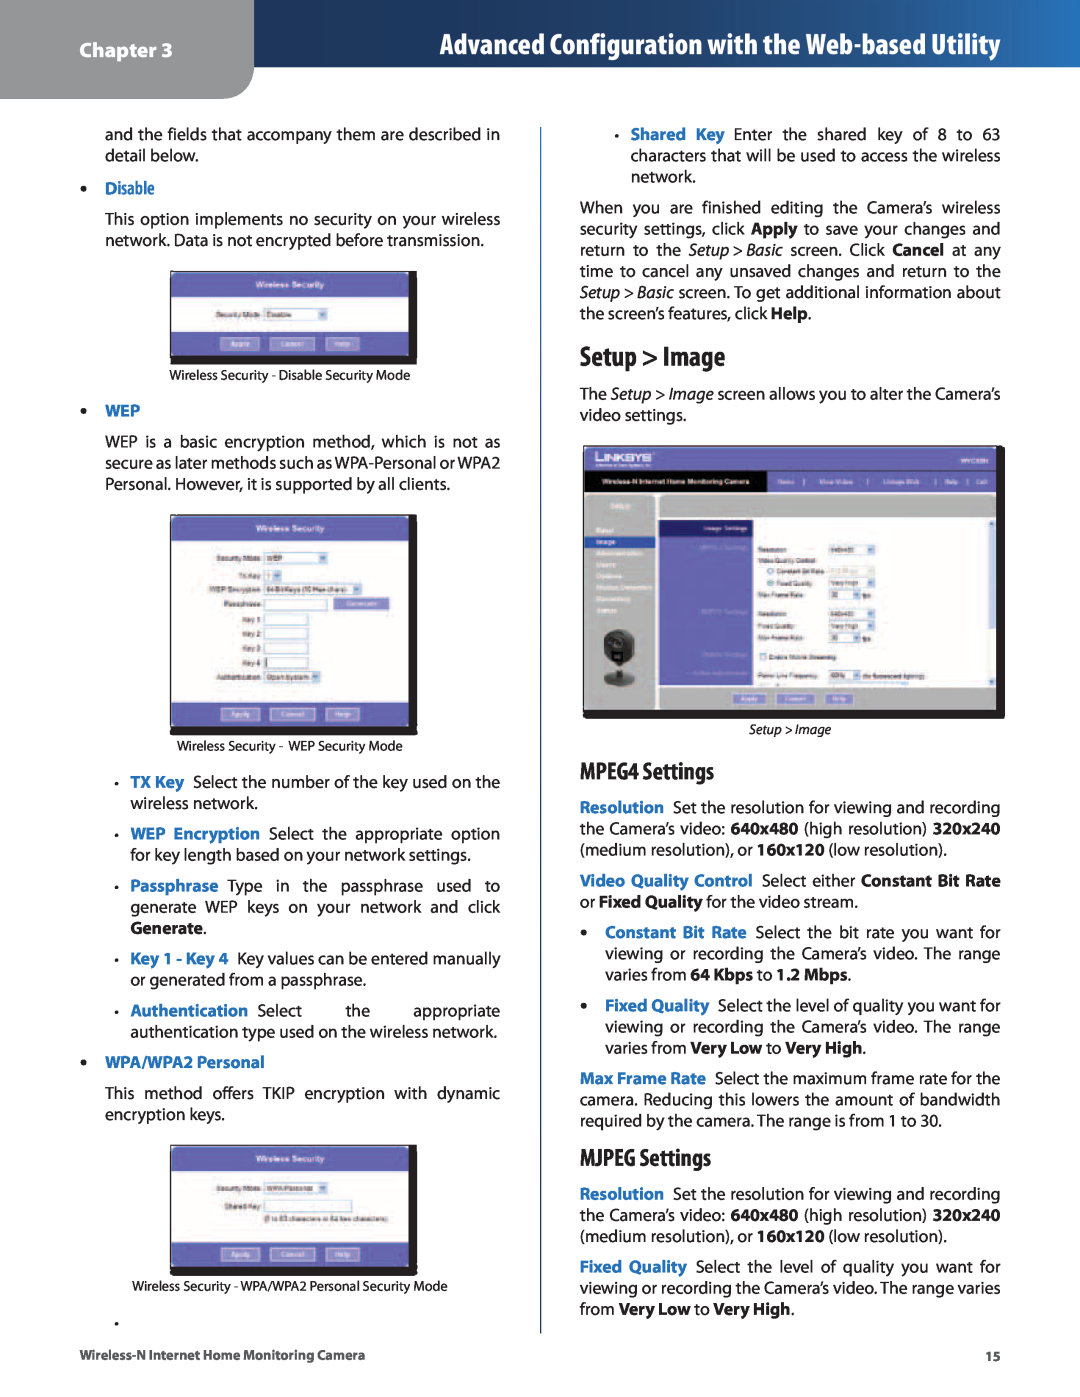 Cisco Systems WVC80N manual Setup Image, Advanced Configuration with the Web-basedUtility, MPEG4 Settings, MJPEG Settings 